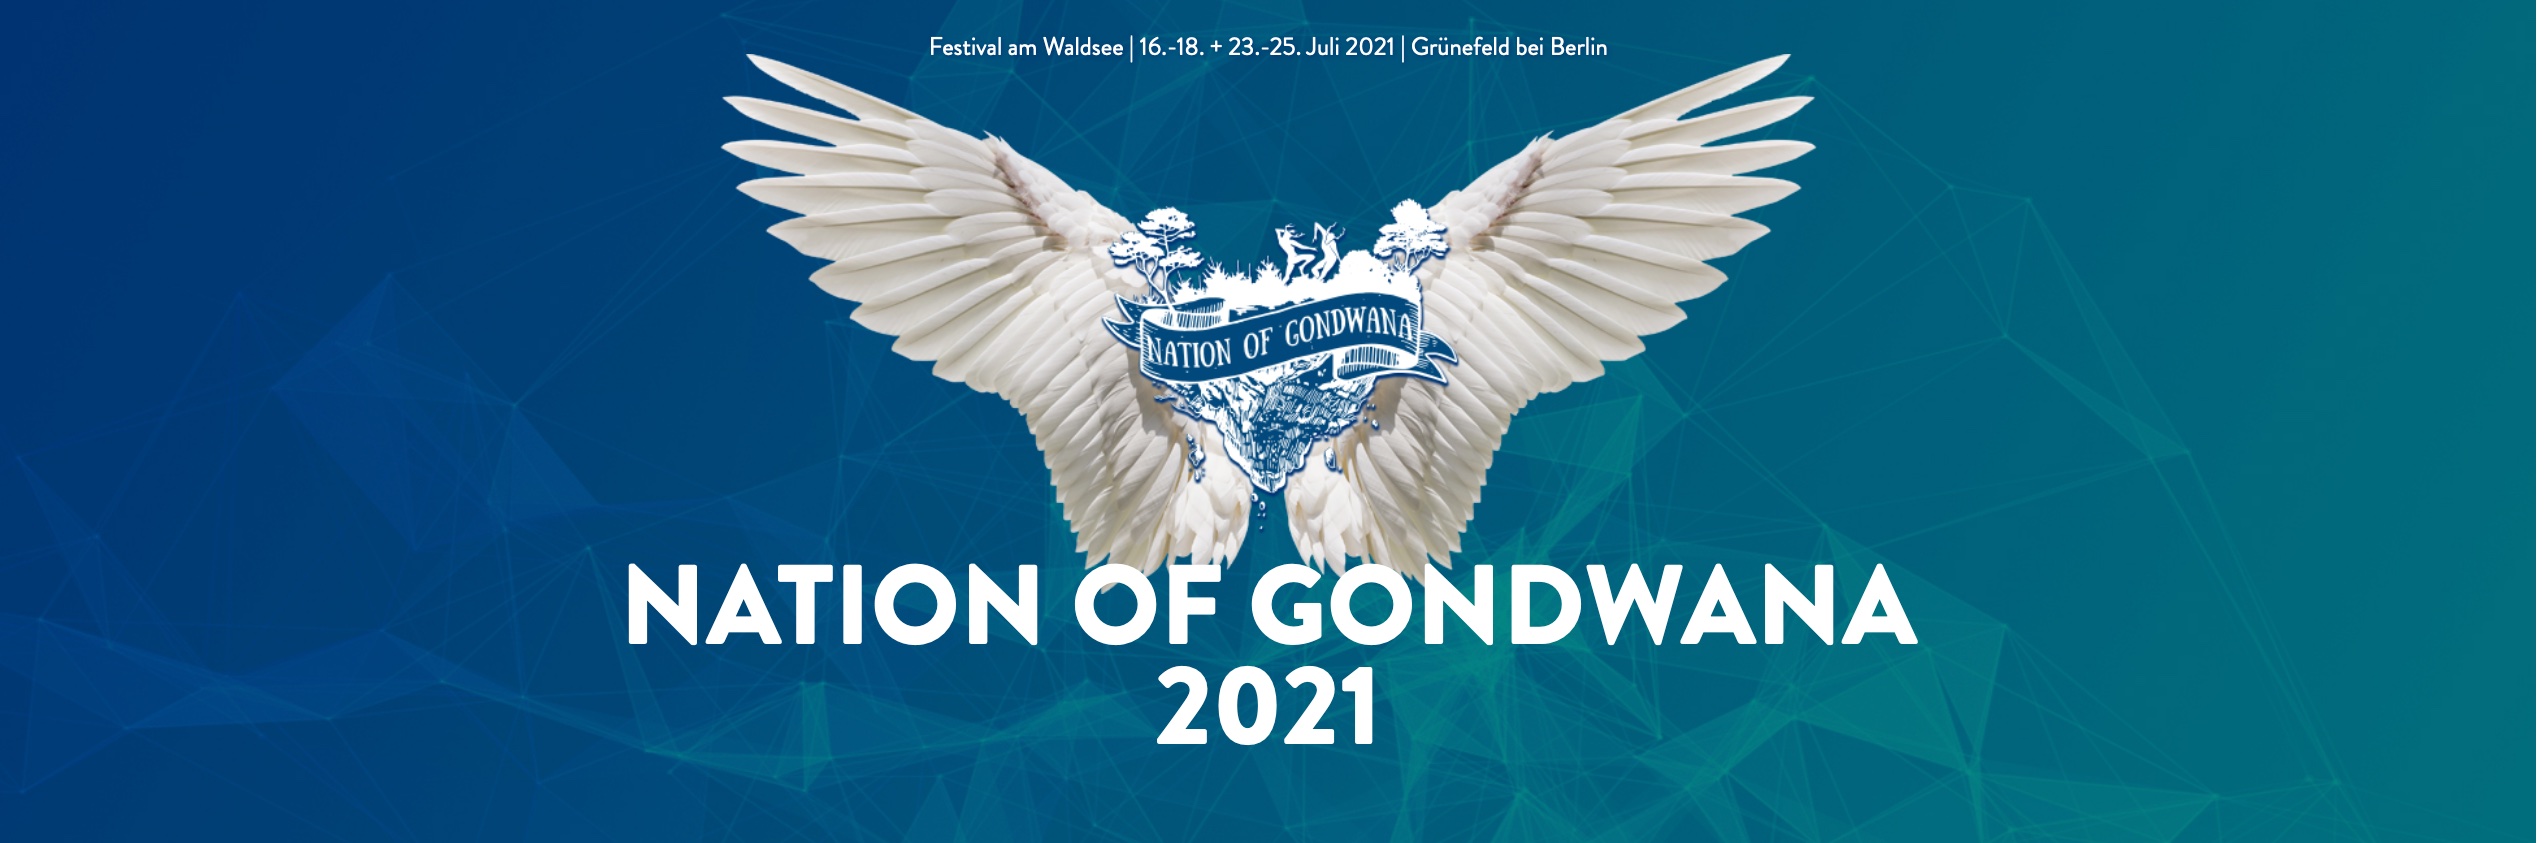 nation of gondwana 2021